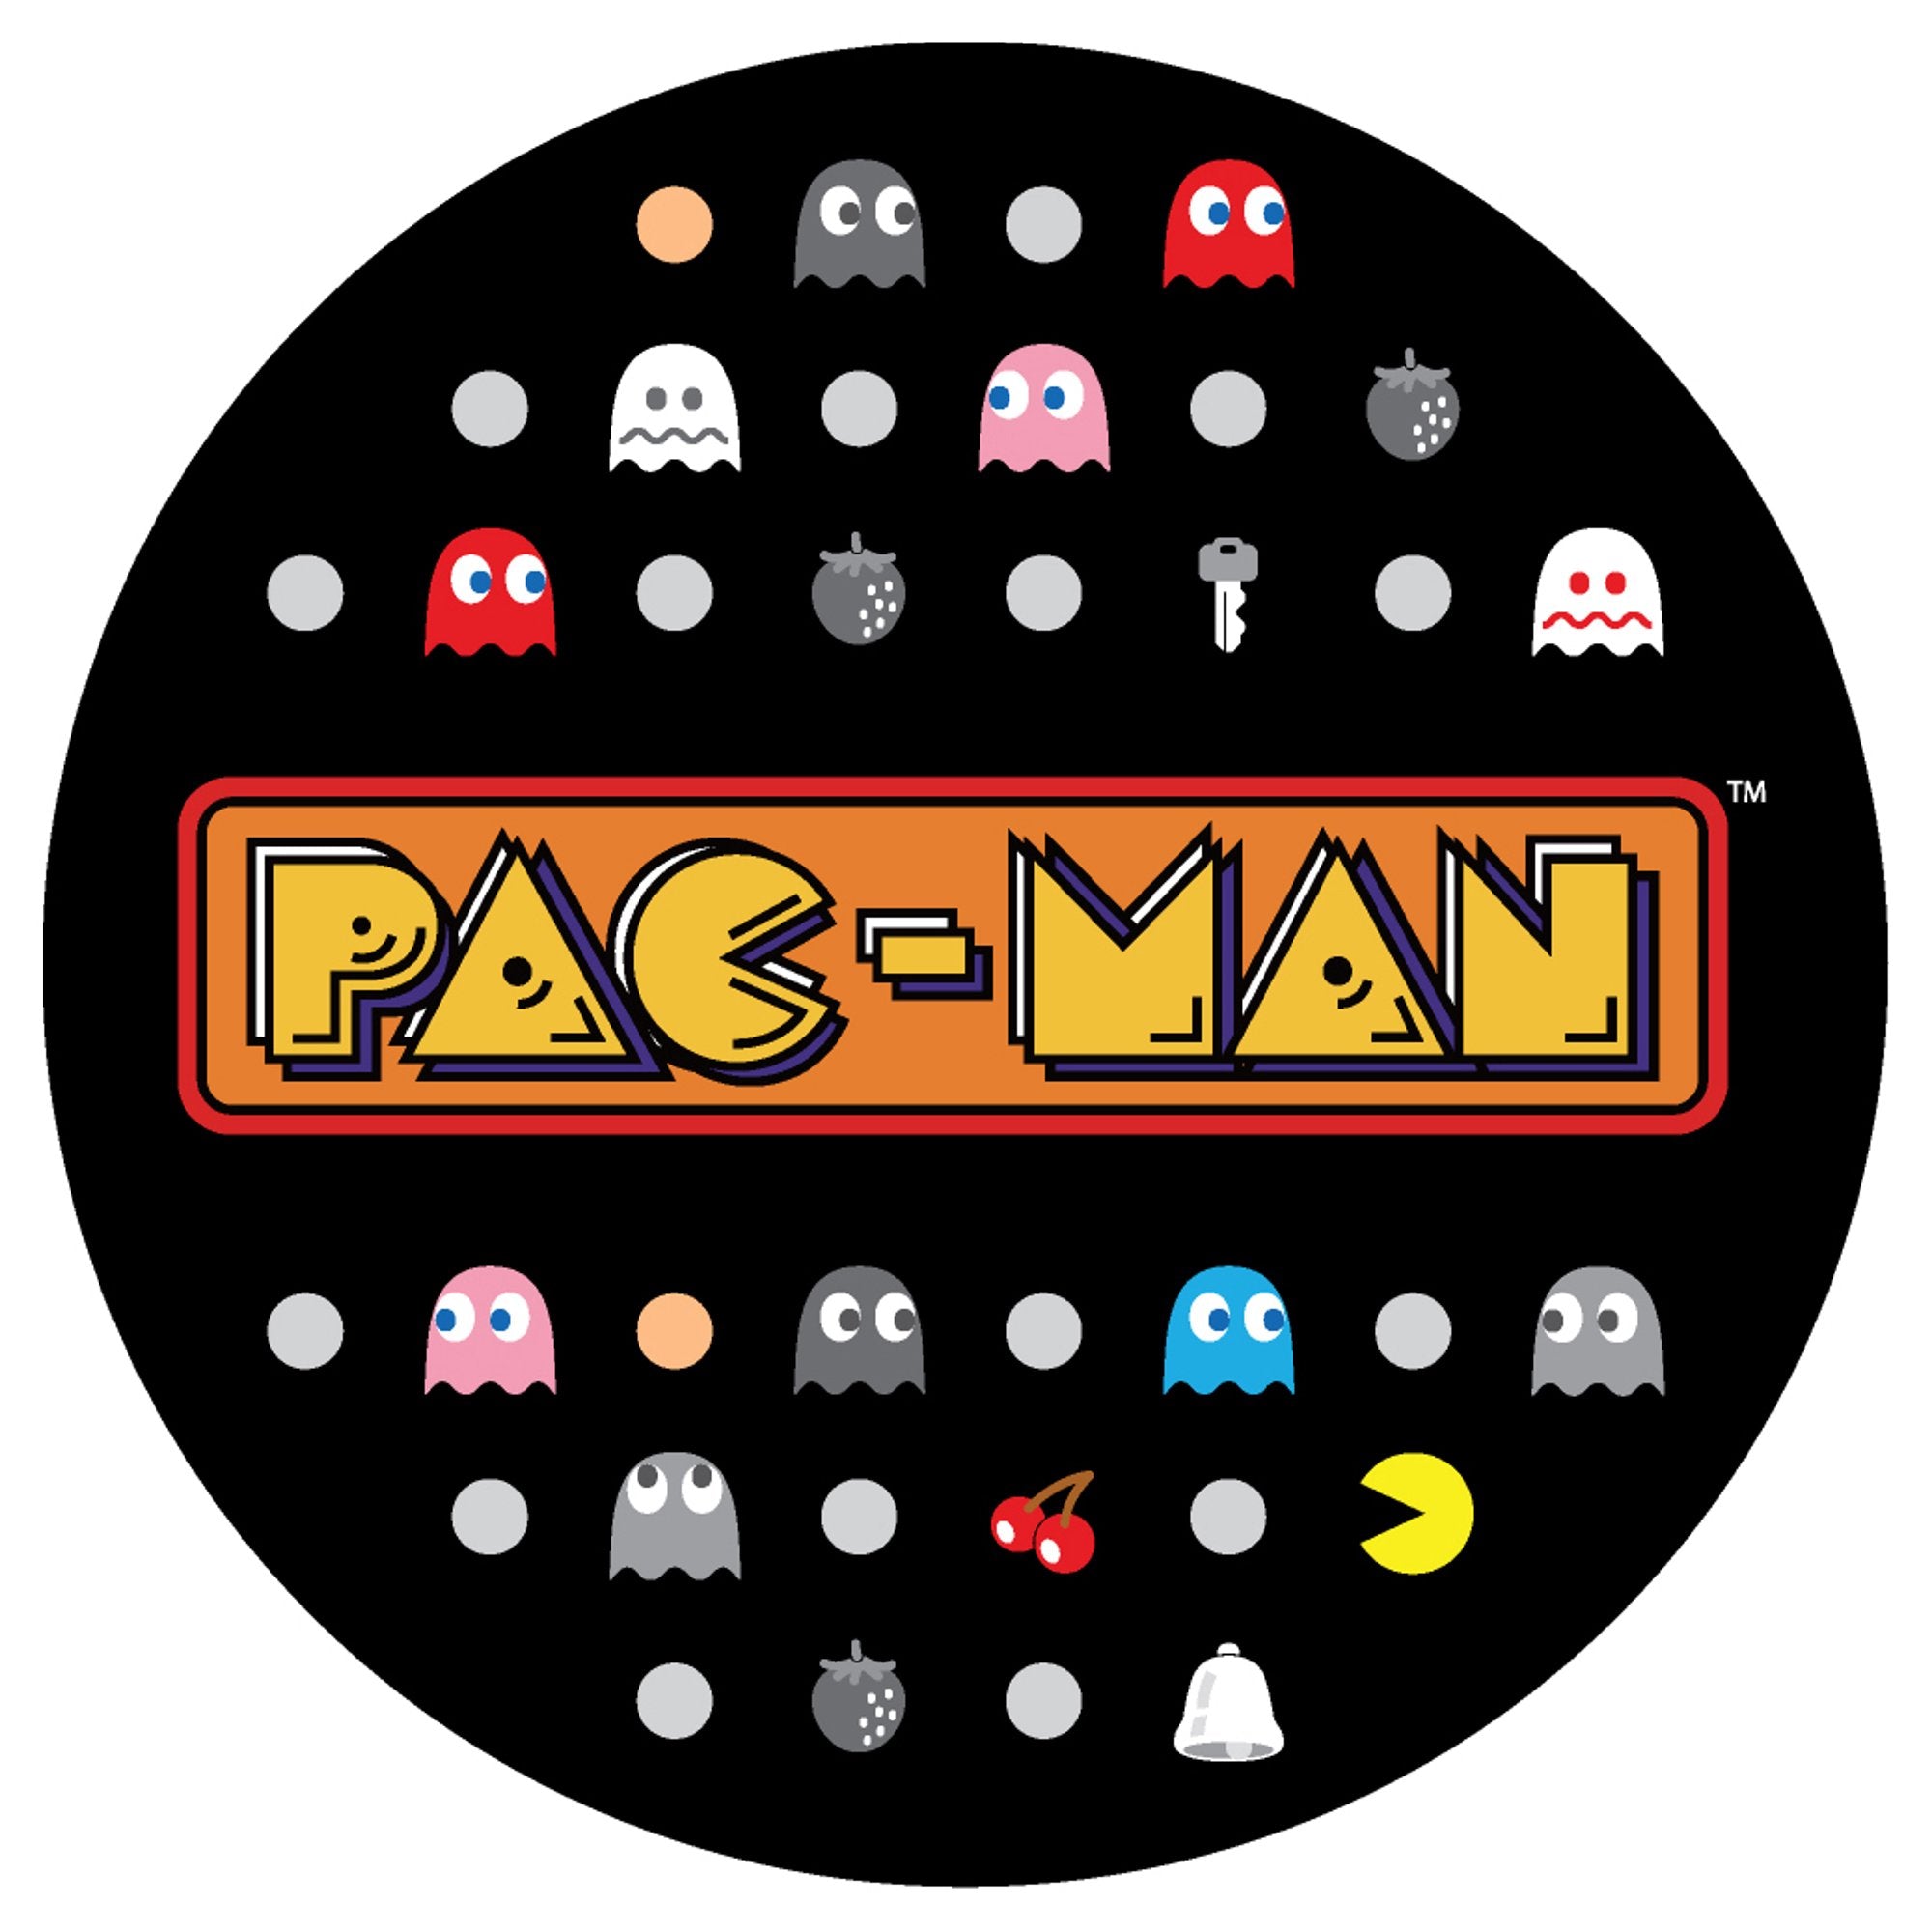 Arcade1Up Pac-Man Adjustable Stool (BANDAI Legacy Version)